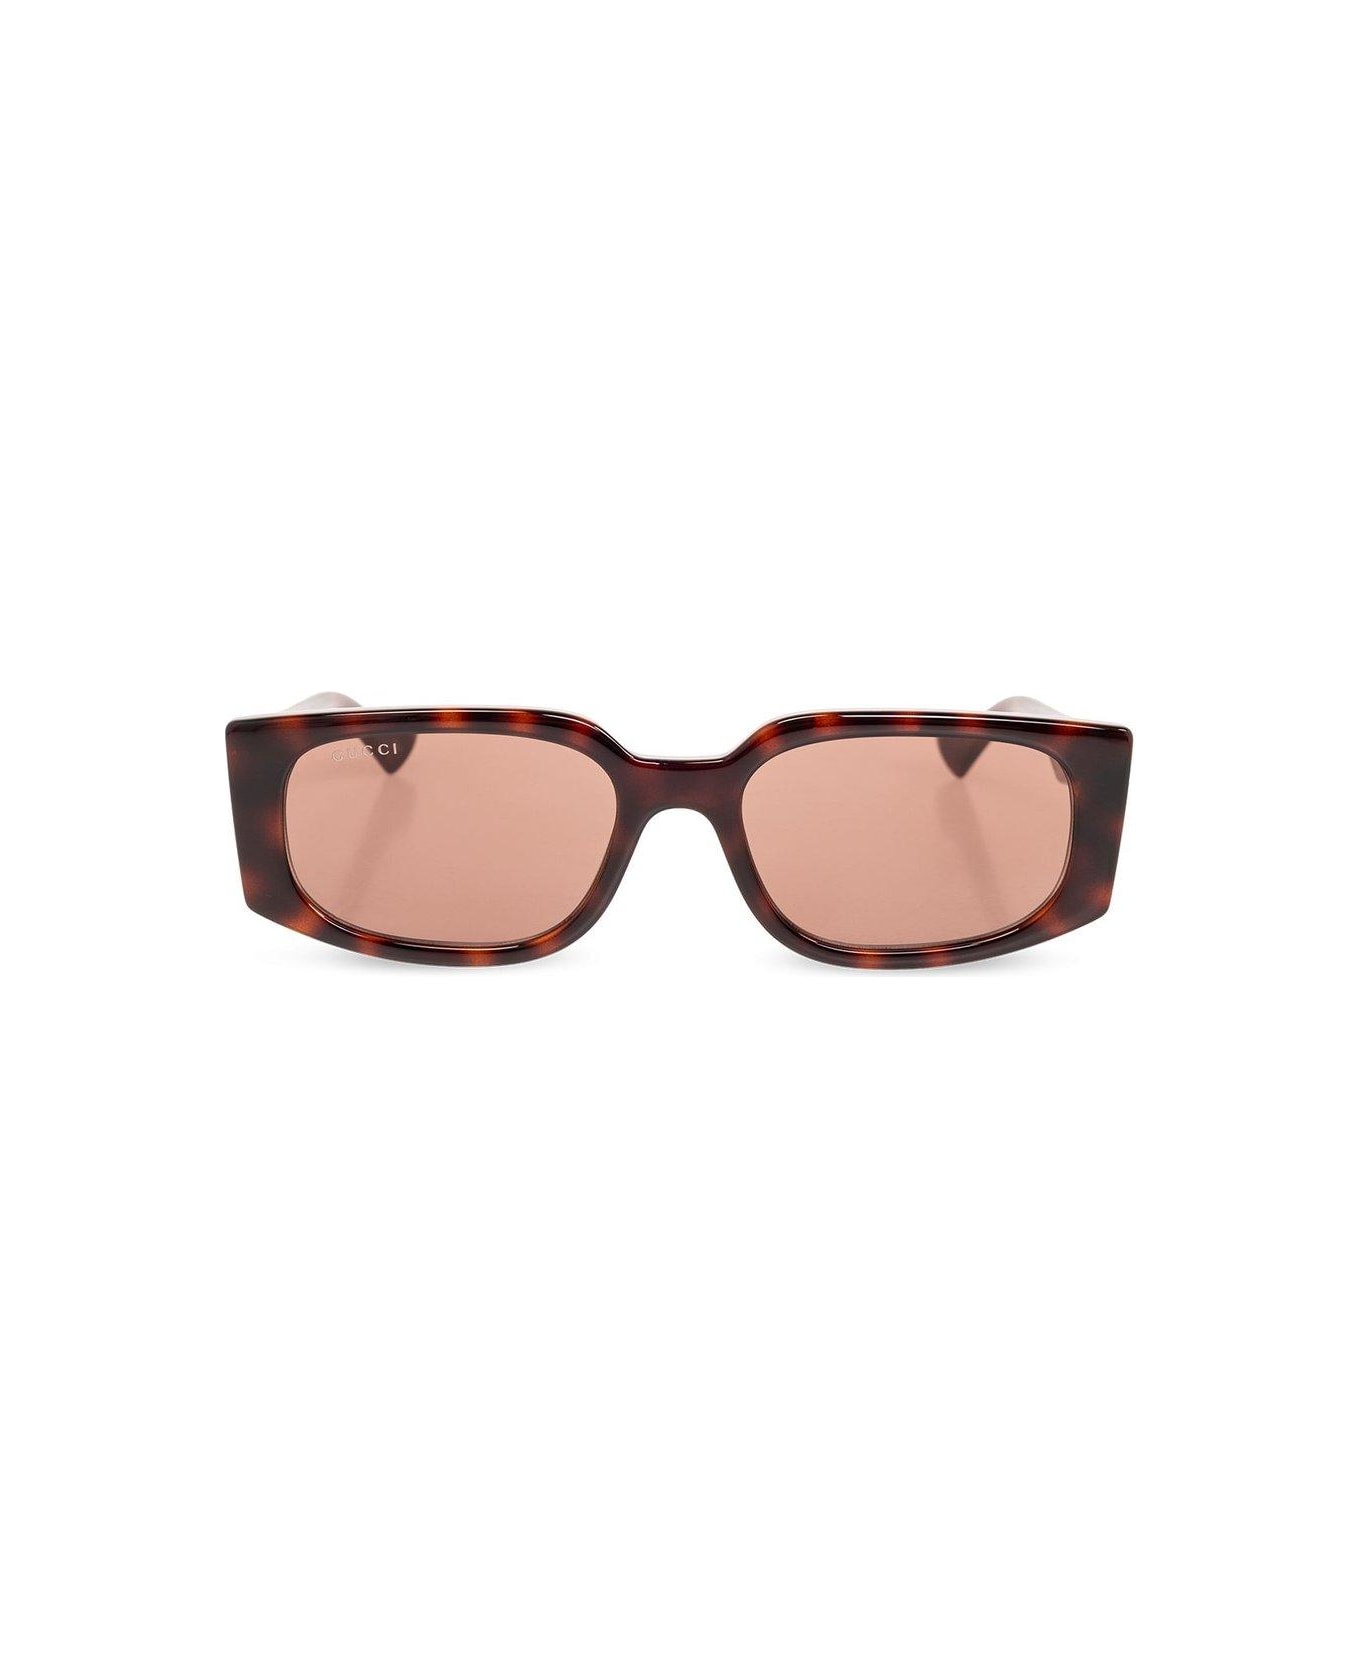 Gucci Eyewear Rectangle Frame Sunglasses - Havana Brown